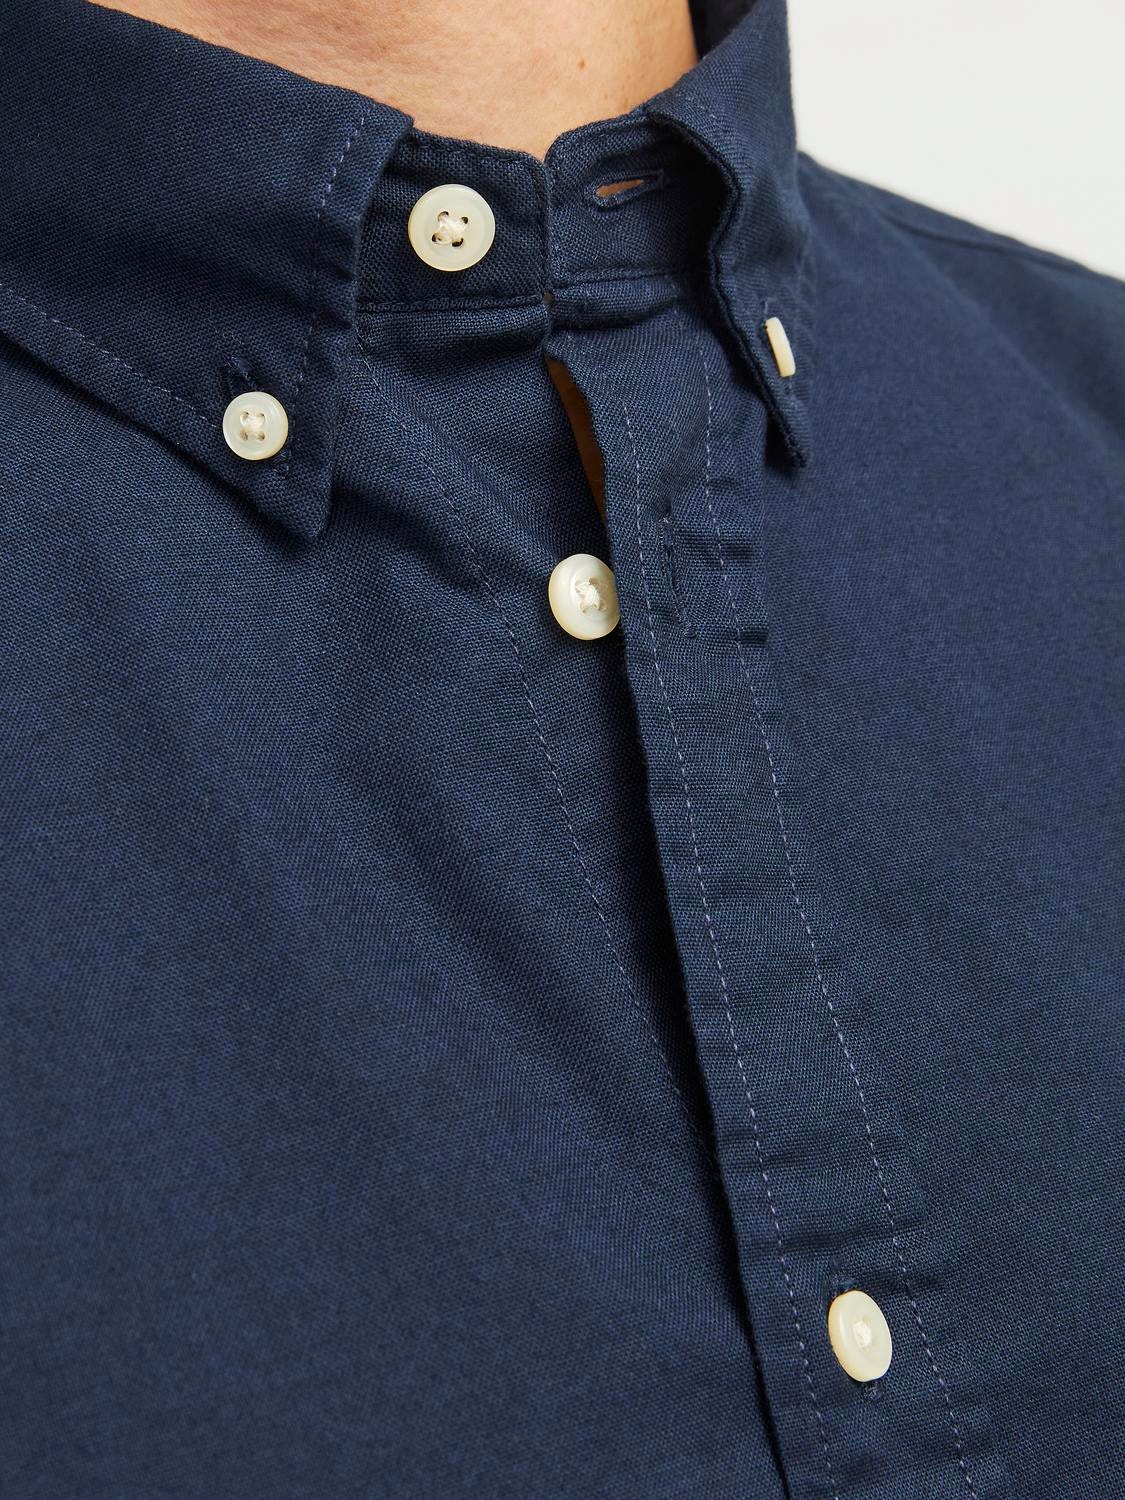 Jack & Jones Slim Fit Oficialūs marškiniai -Navy Blazer - 12192150